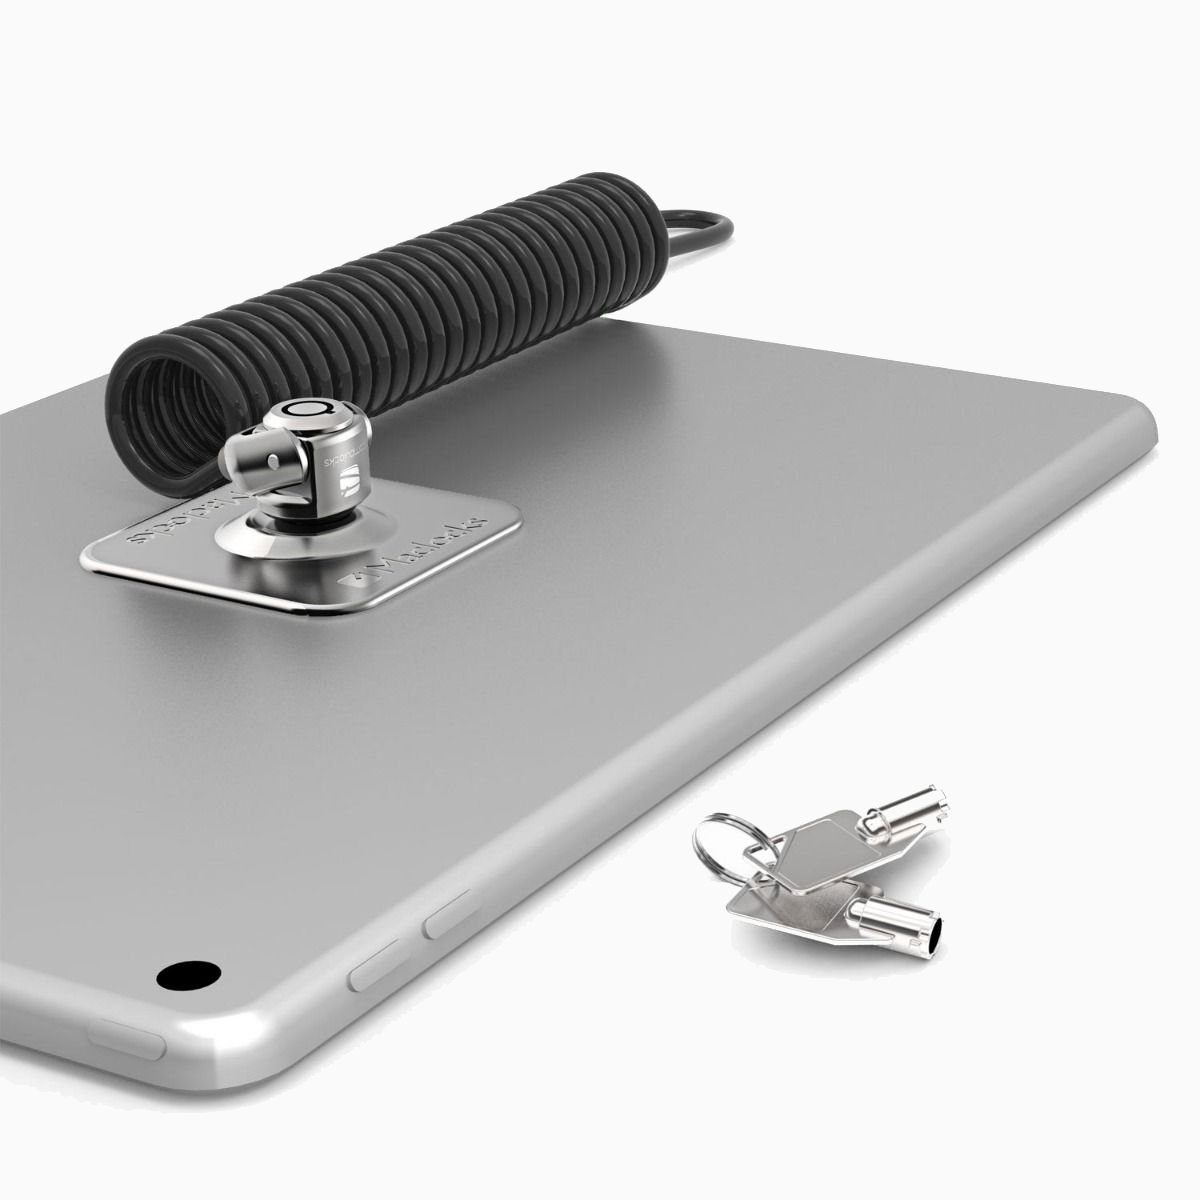 Maclocks Universal Tablet Lock Adhesive Security Plate